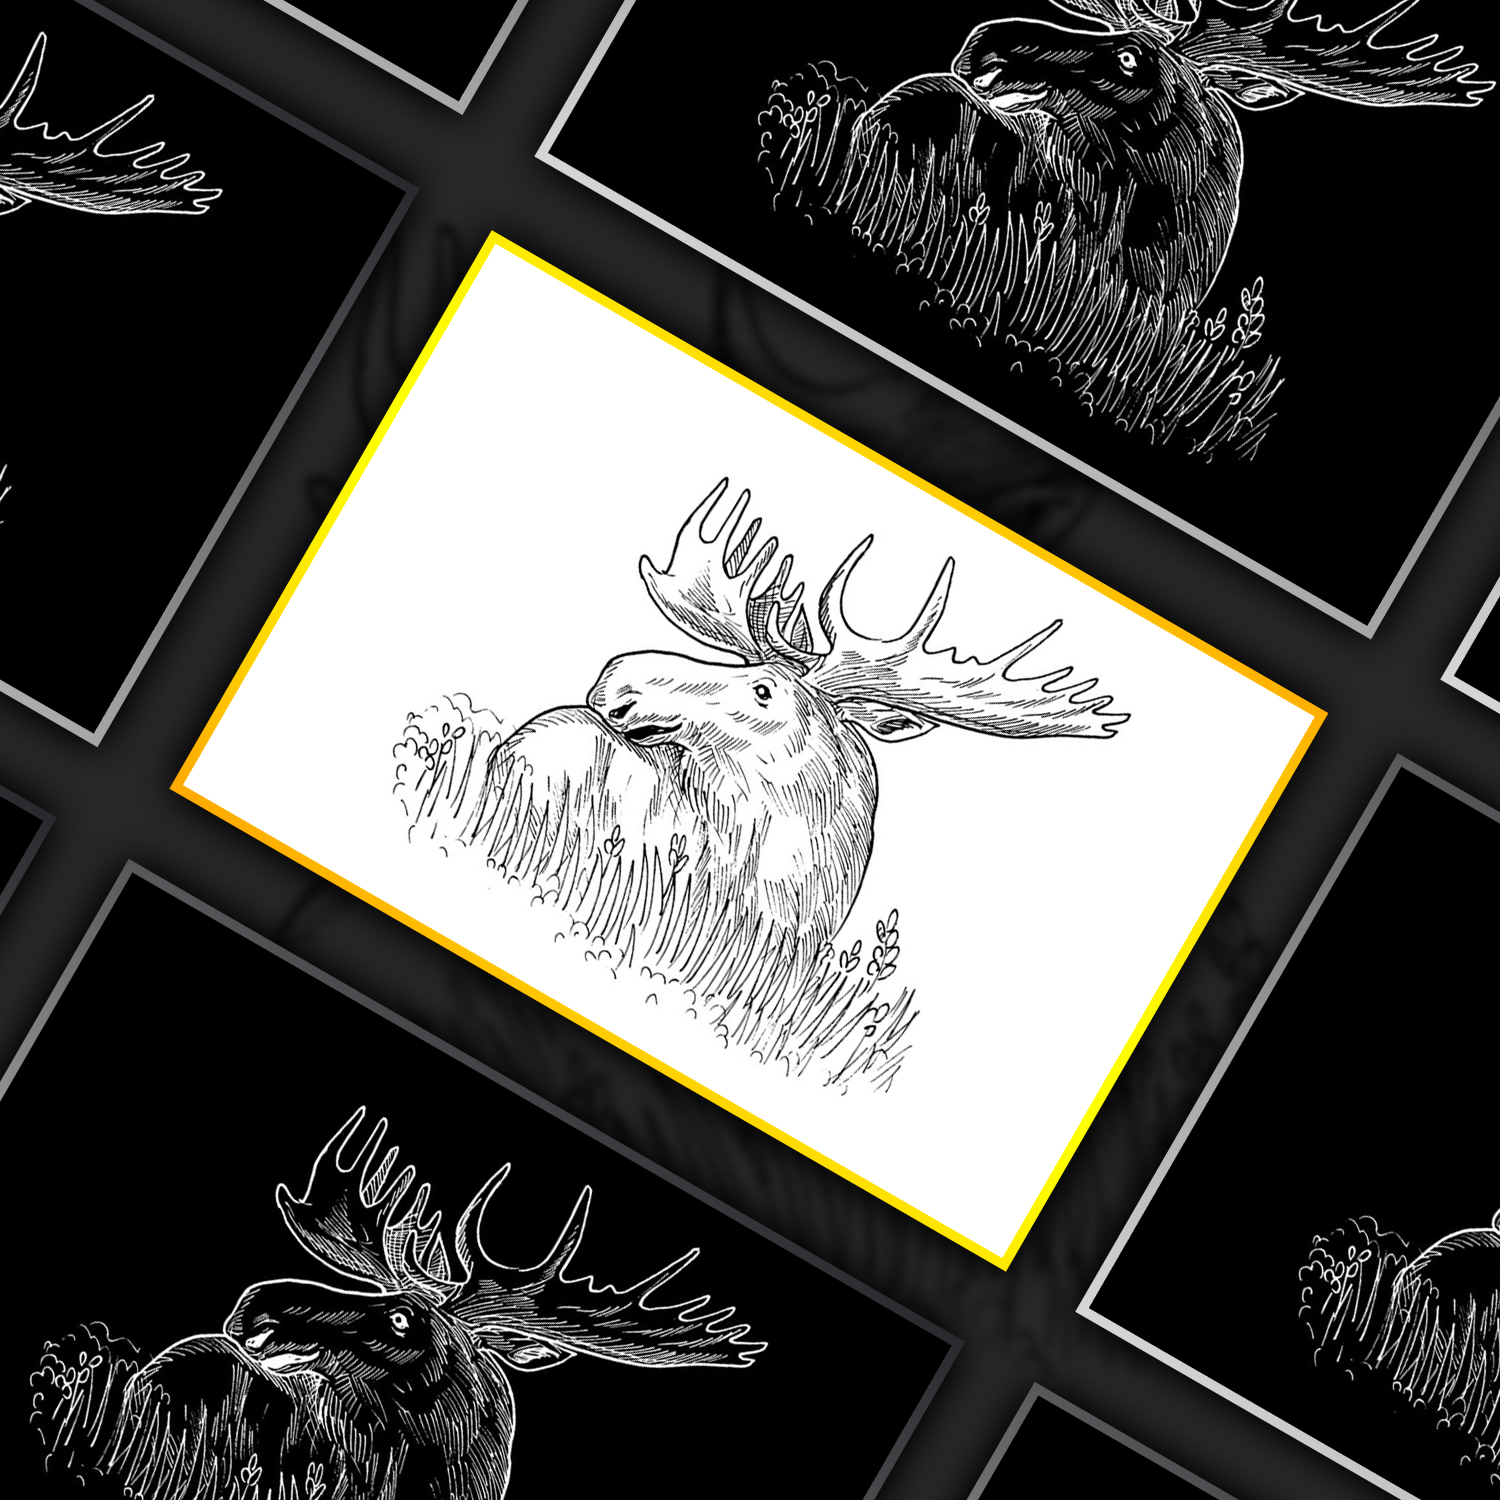 Preview moose or common european elk drawing.